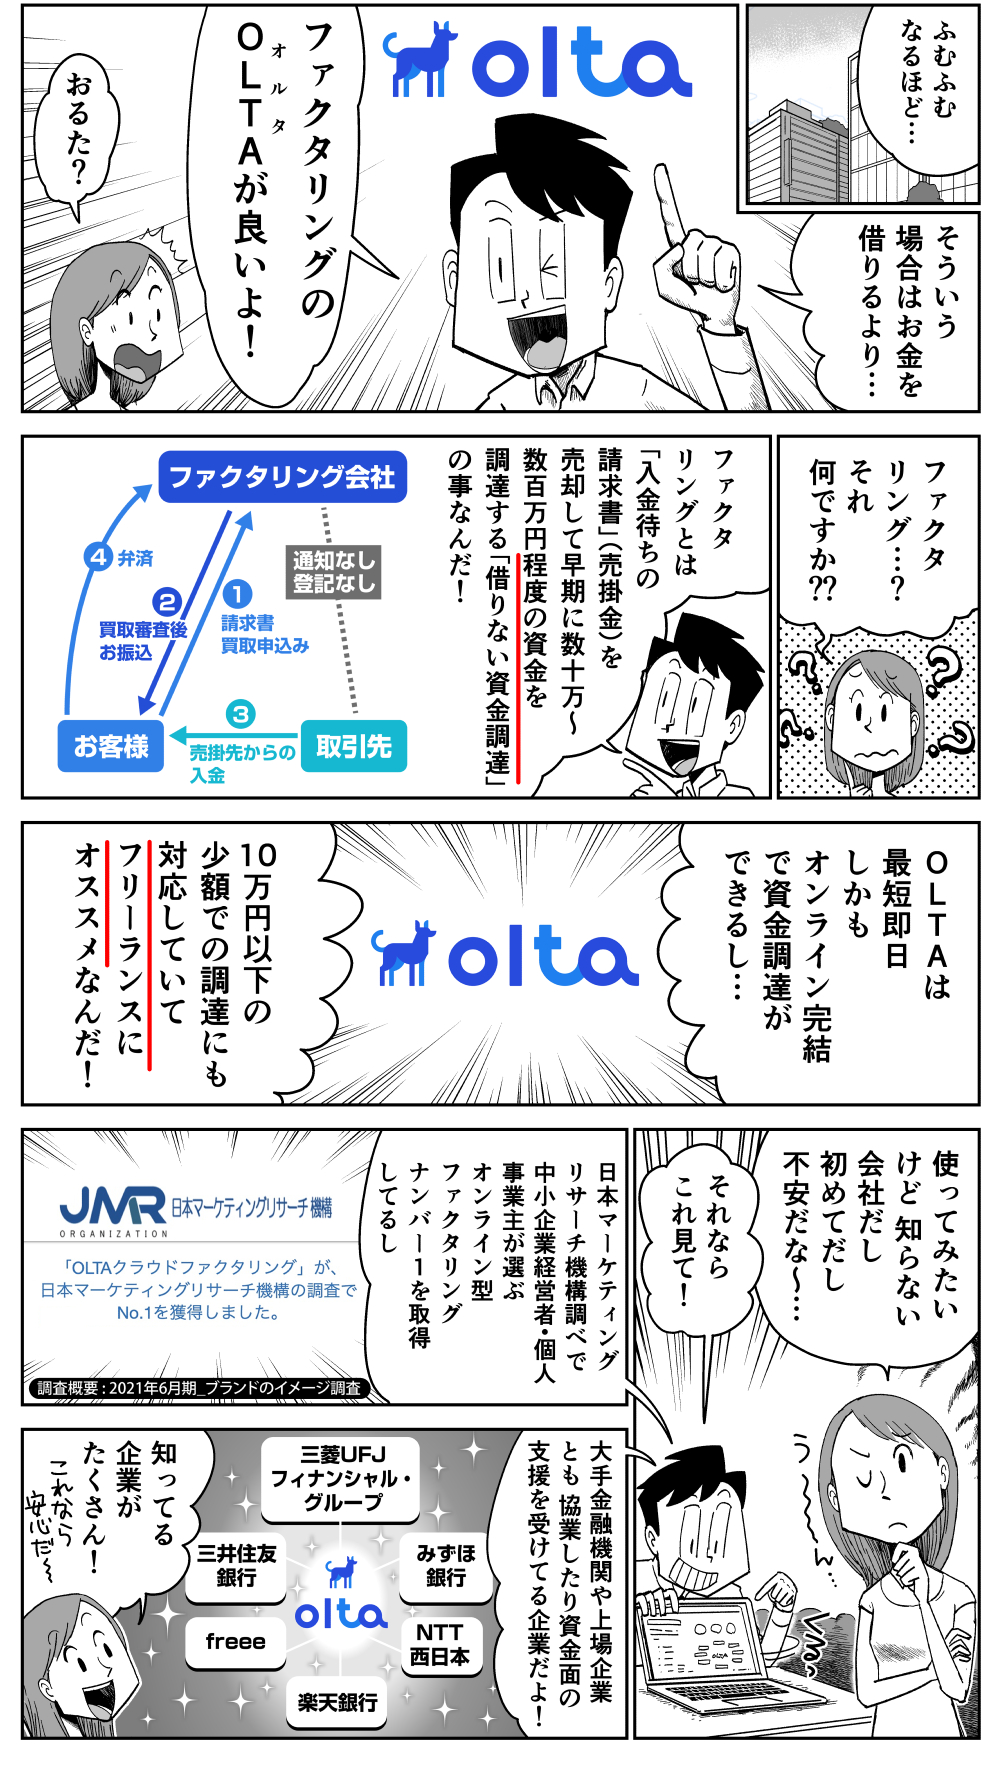  OLTA様 PR漫画 マンガ  イラスト　漫画　イラストレーター